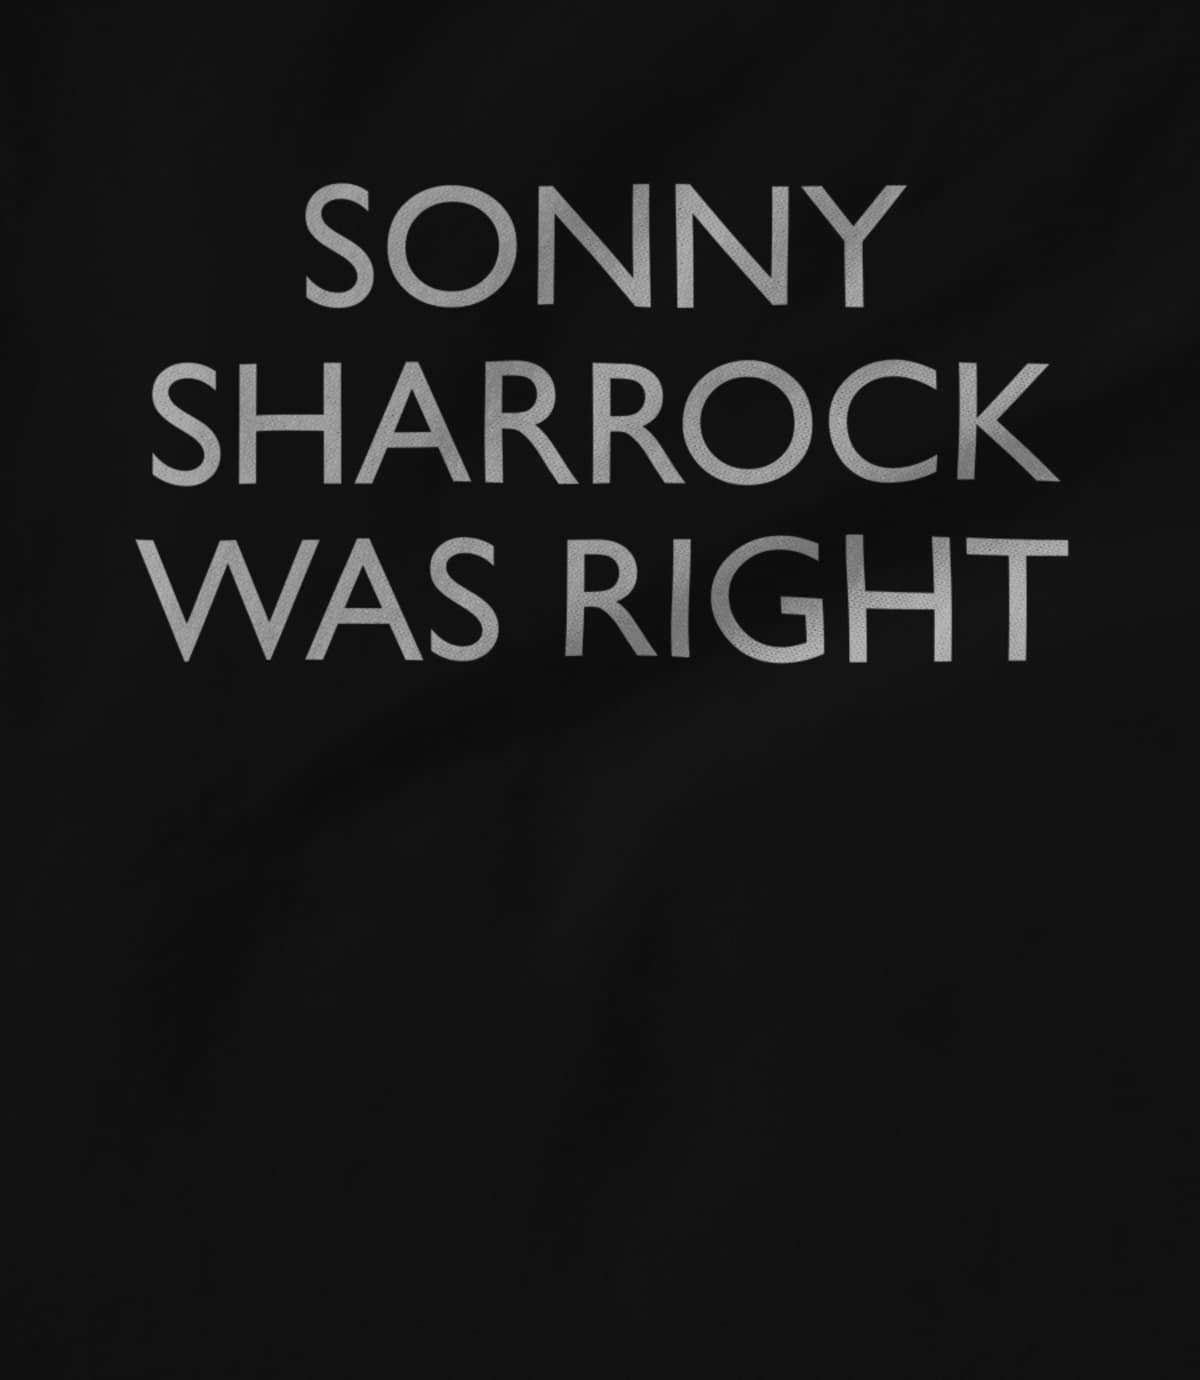 The infinite three sonny sharrock was right 1501786171